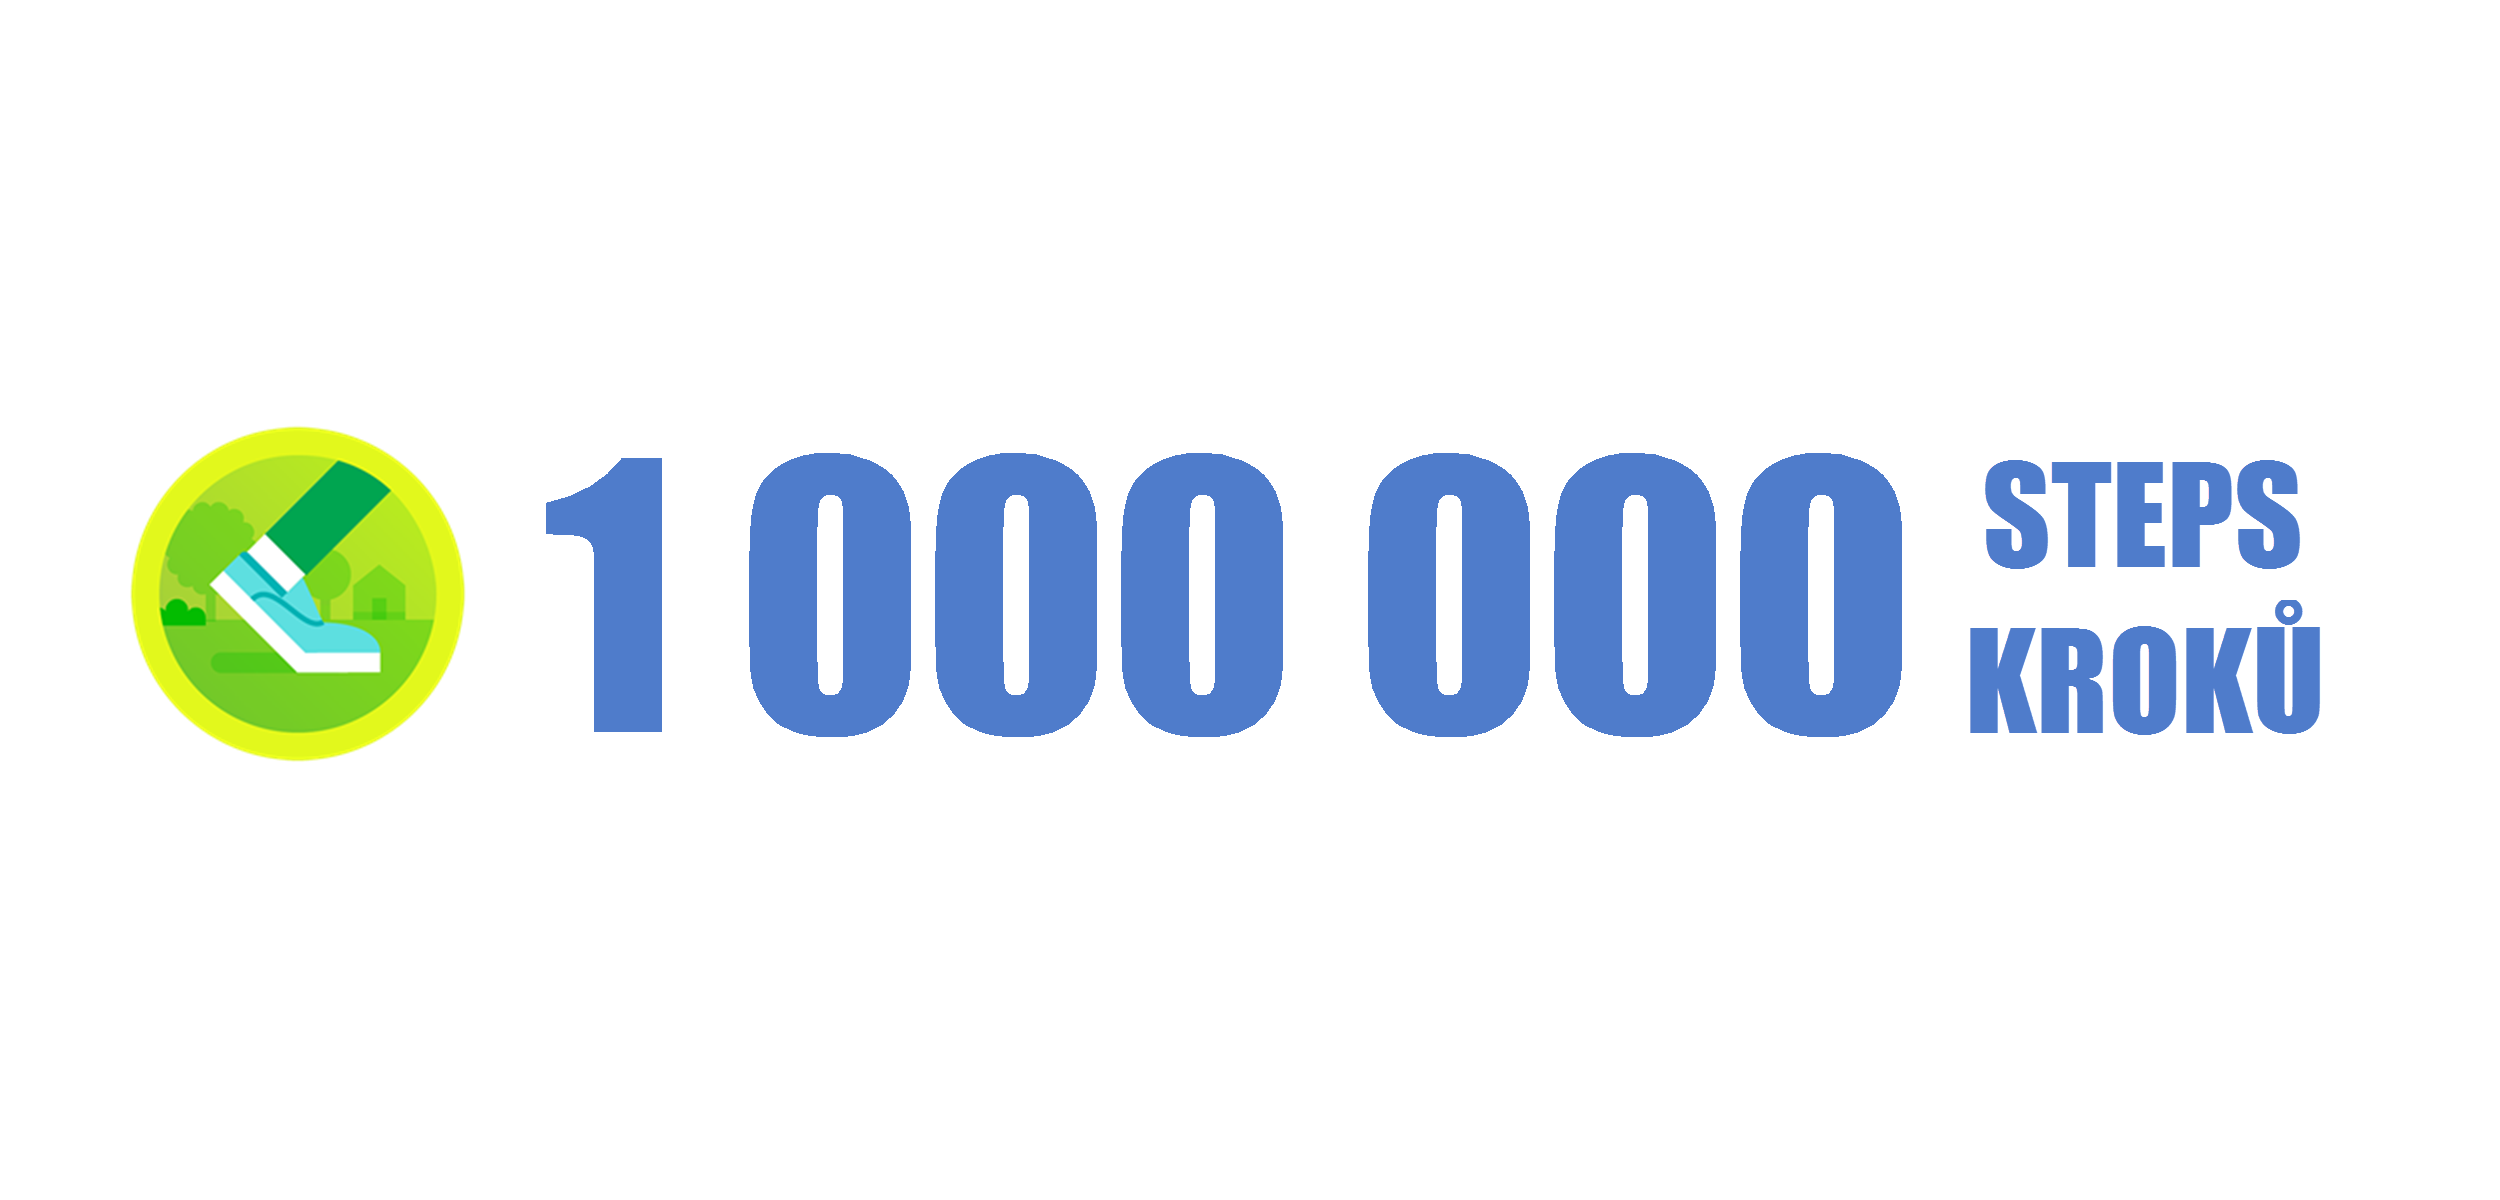 1000000 steps